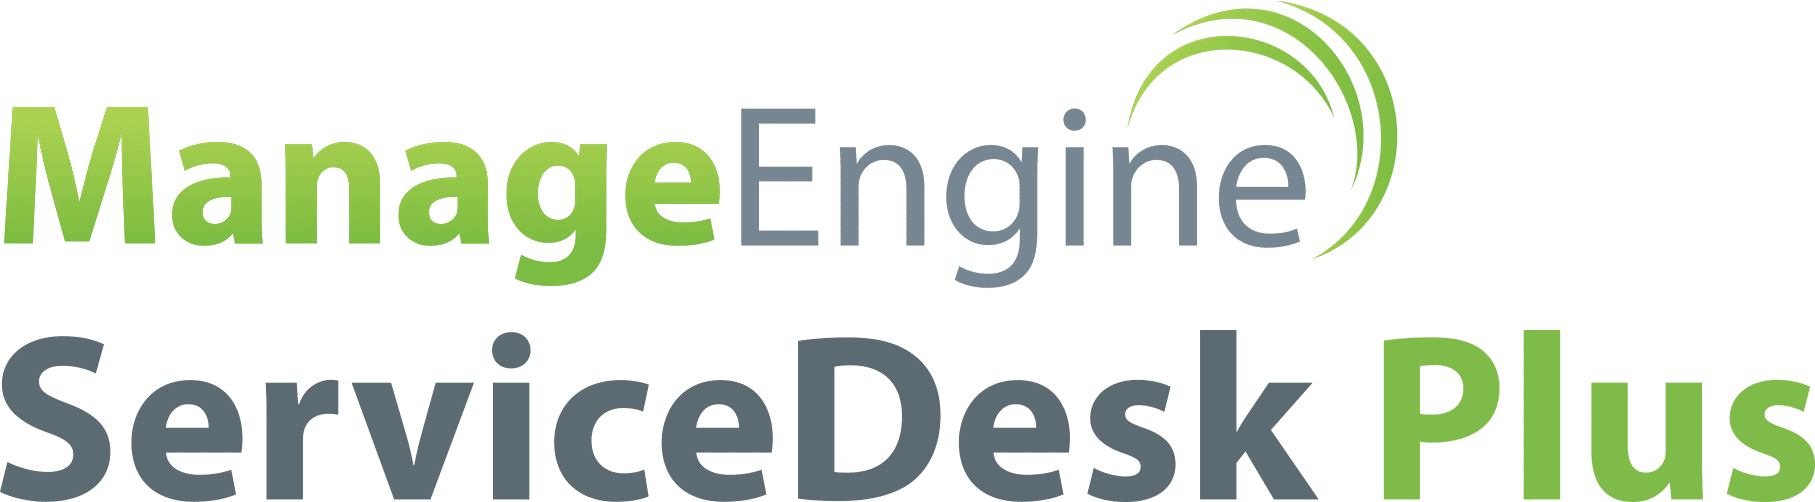 ManageEngine ServiceDesk Plus - Service Desk Software